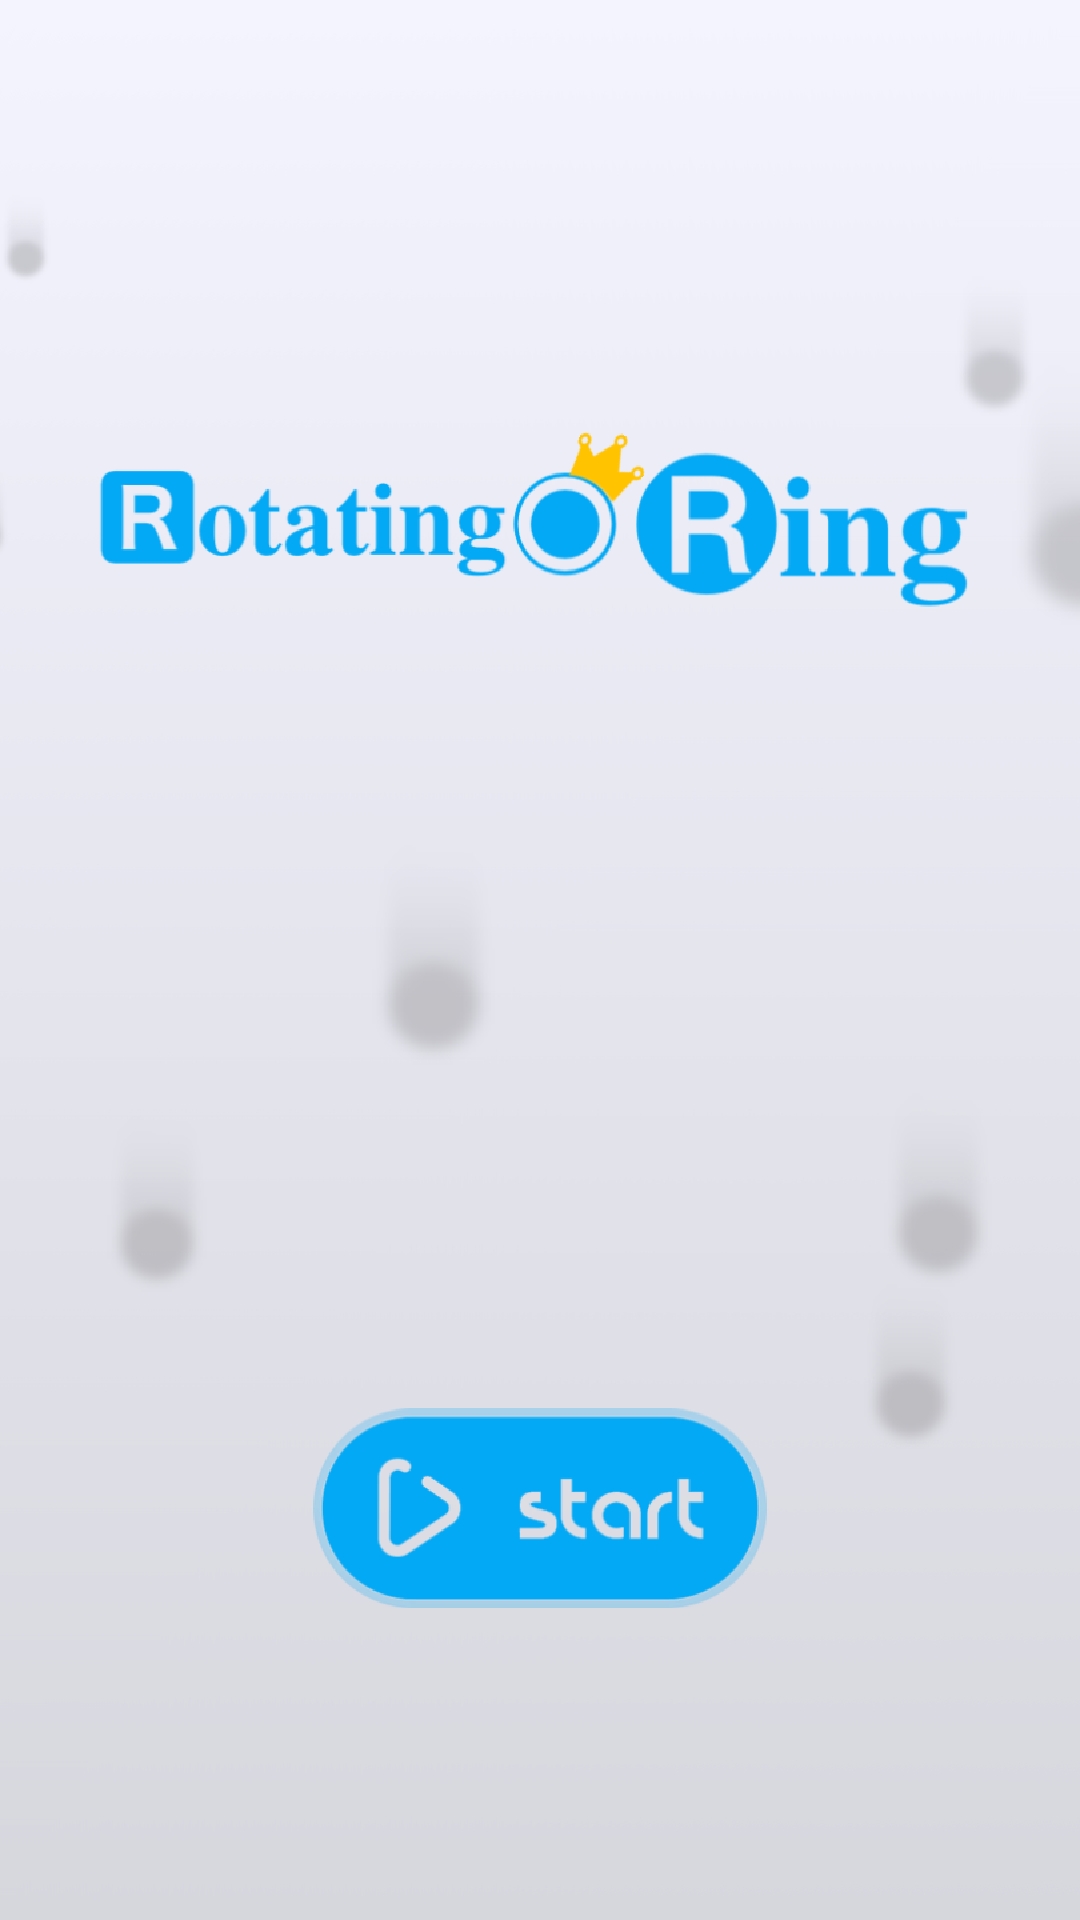 screenshot_20210107-192240_rotating-ring-jpg.4495